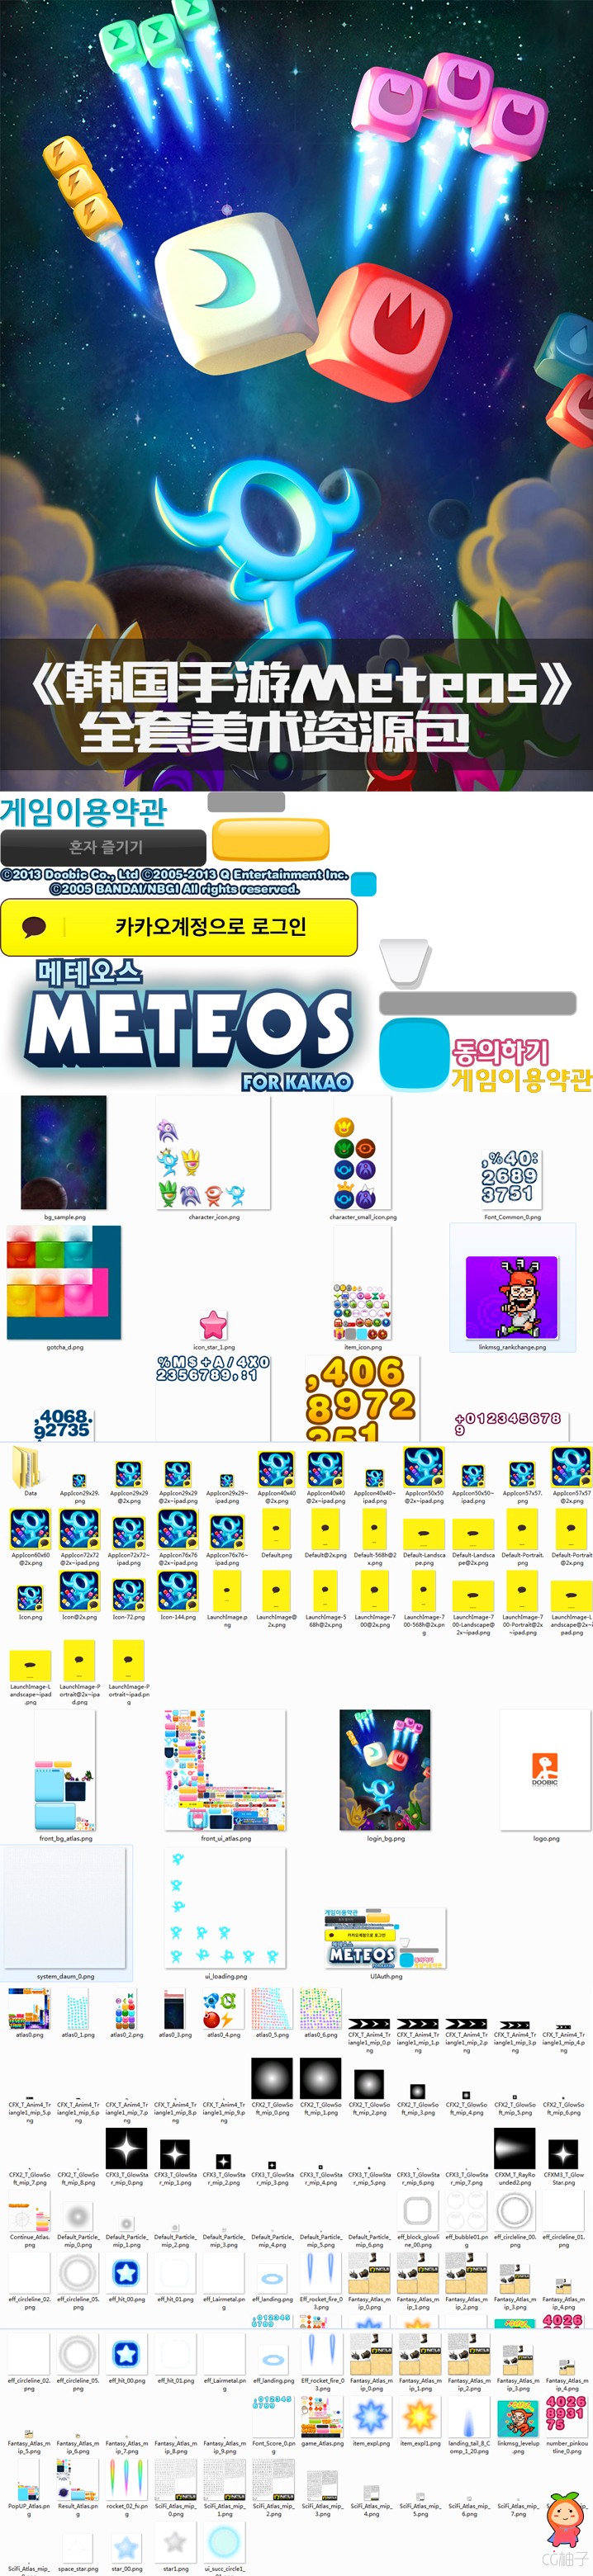 《Meteos》质量相当不错的韩国手游资源包133MB